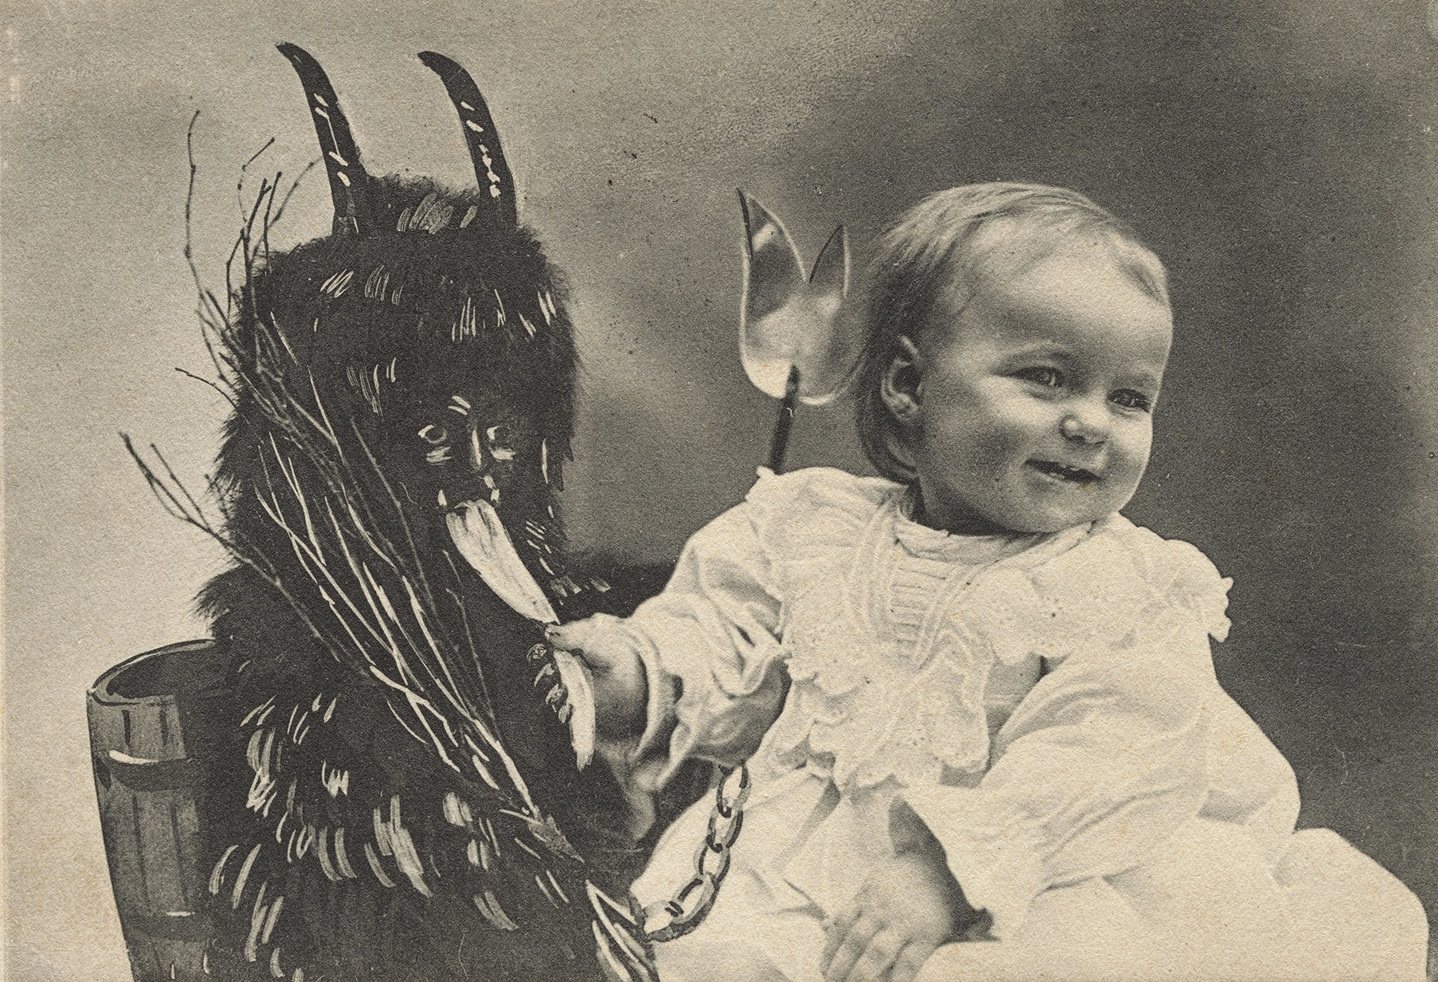 A child posing with a version of Krampus in Vienna, Austria in 1909.